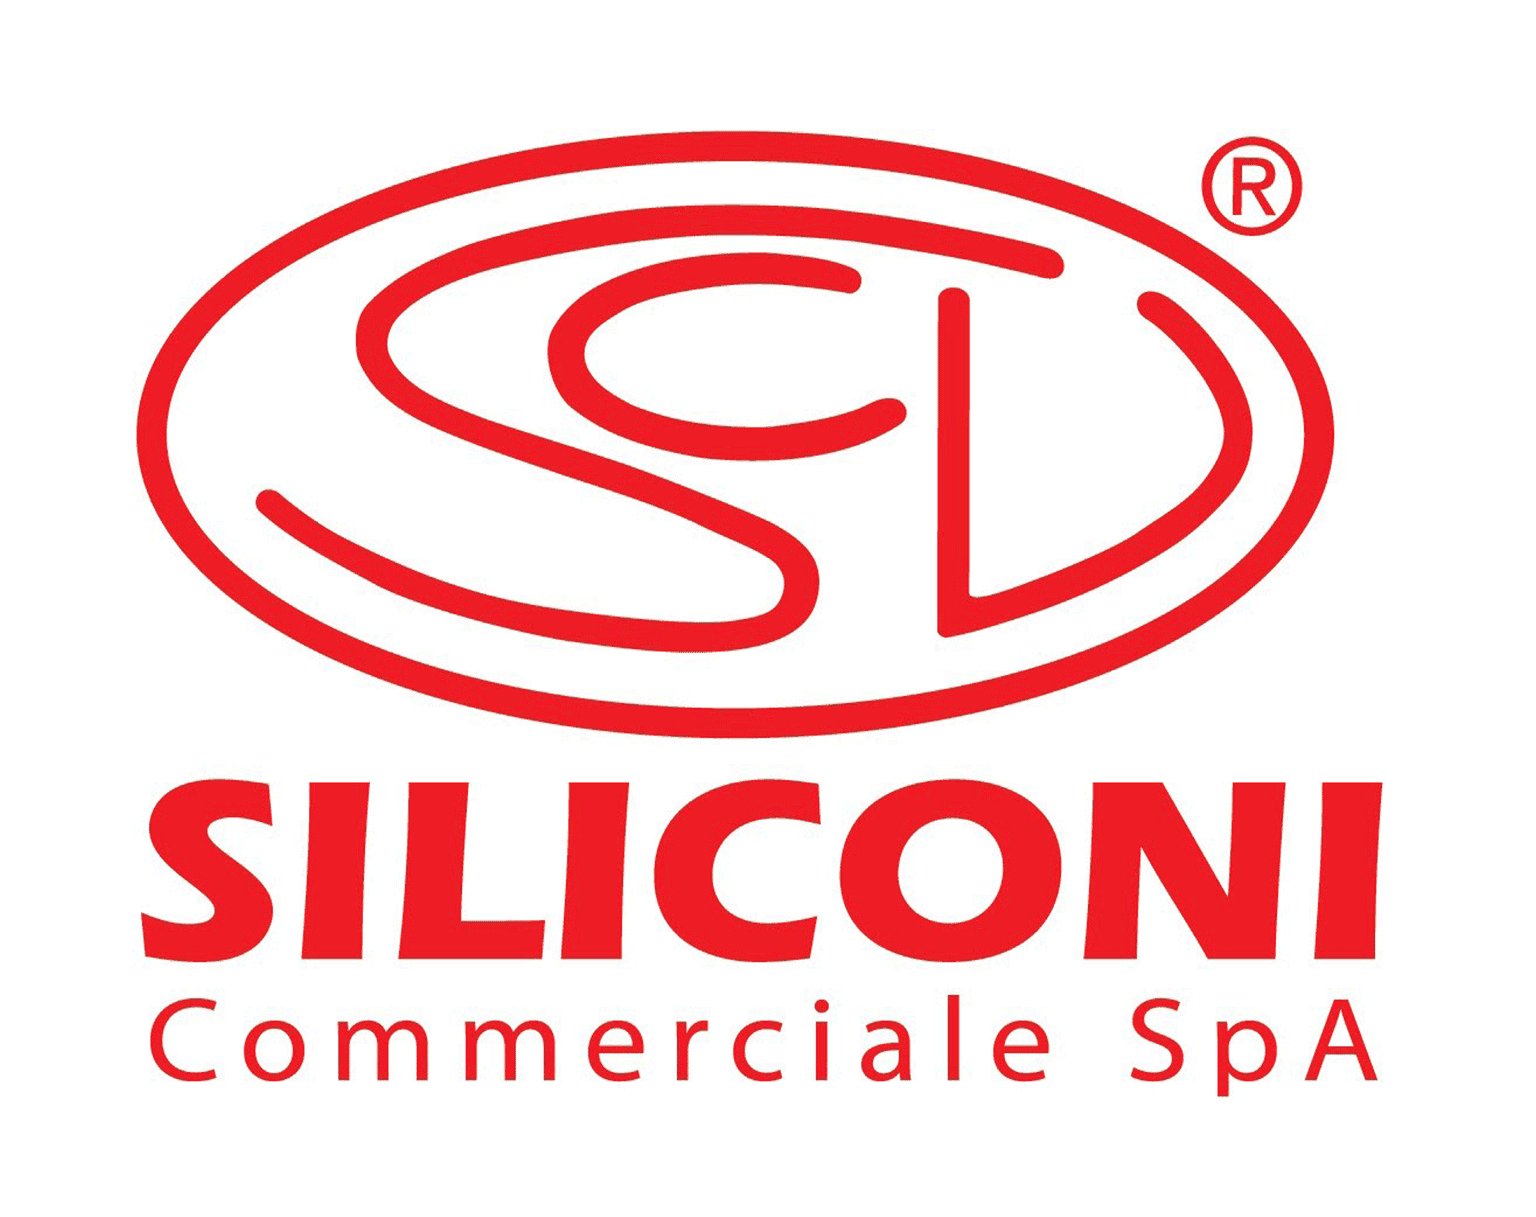 Siliconi